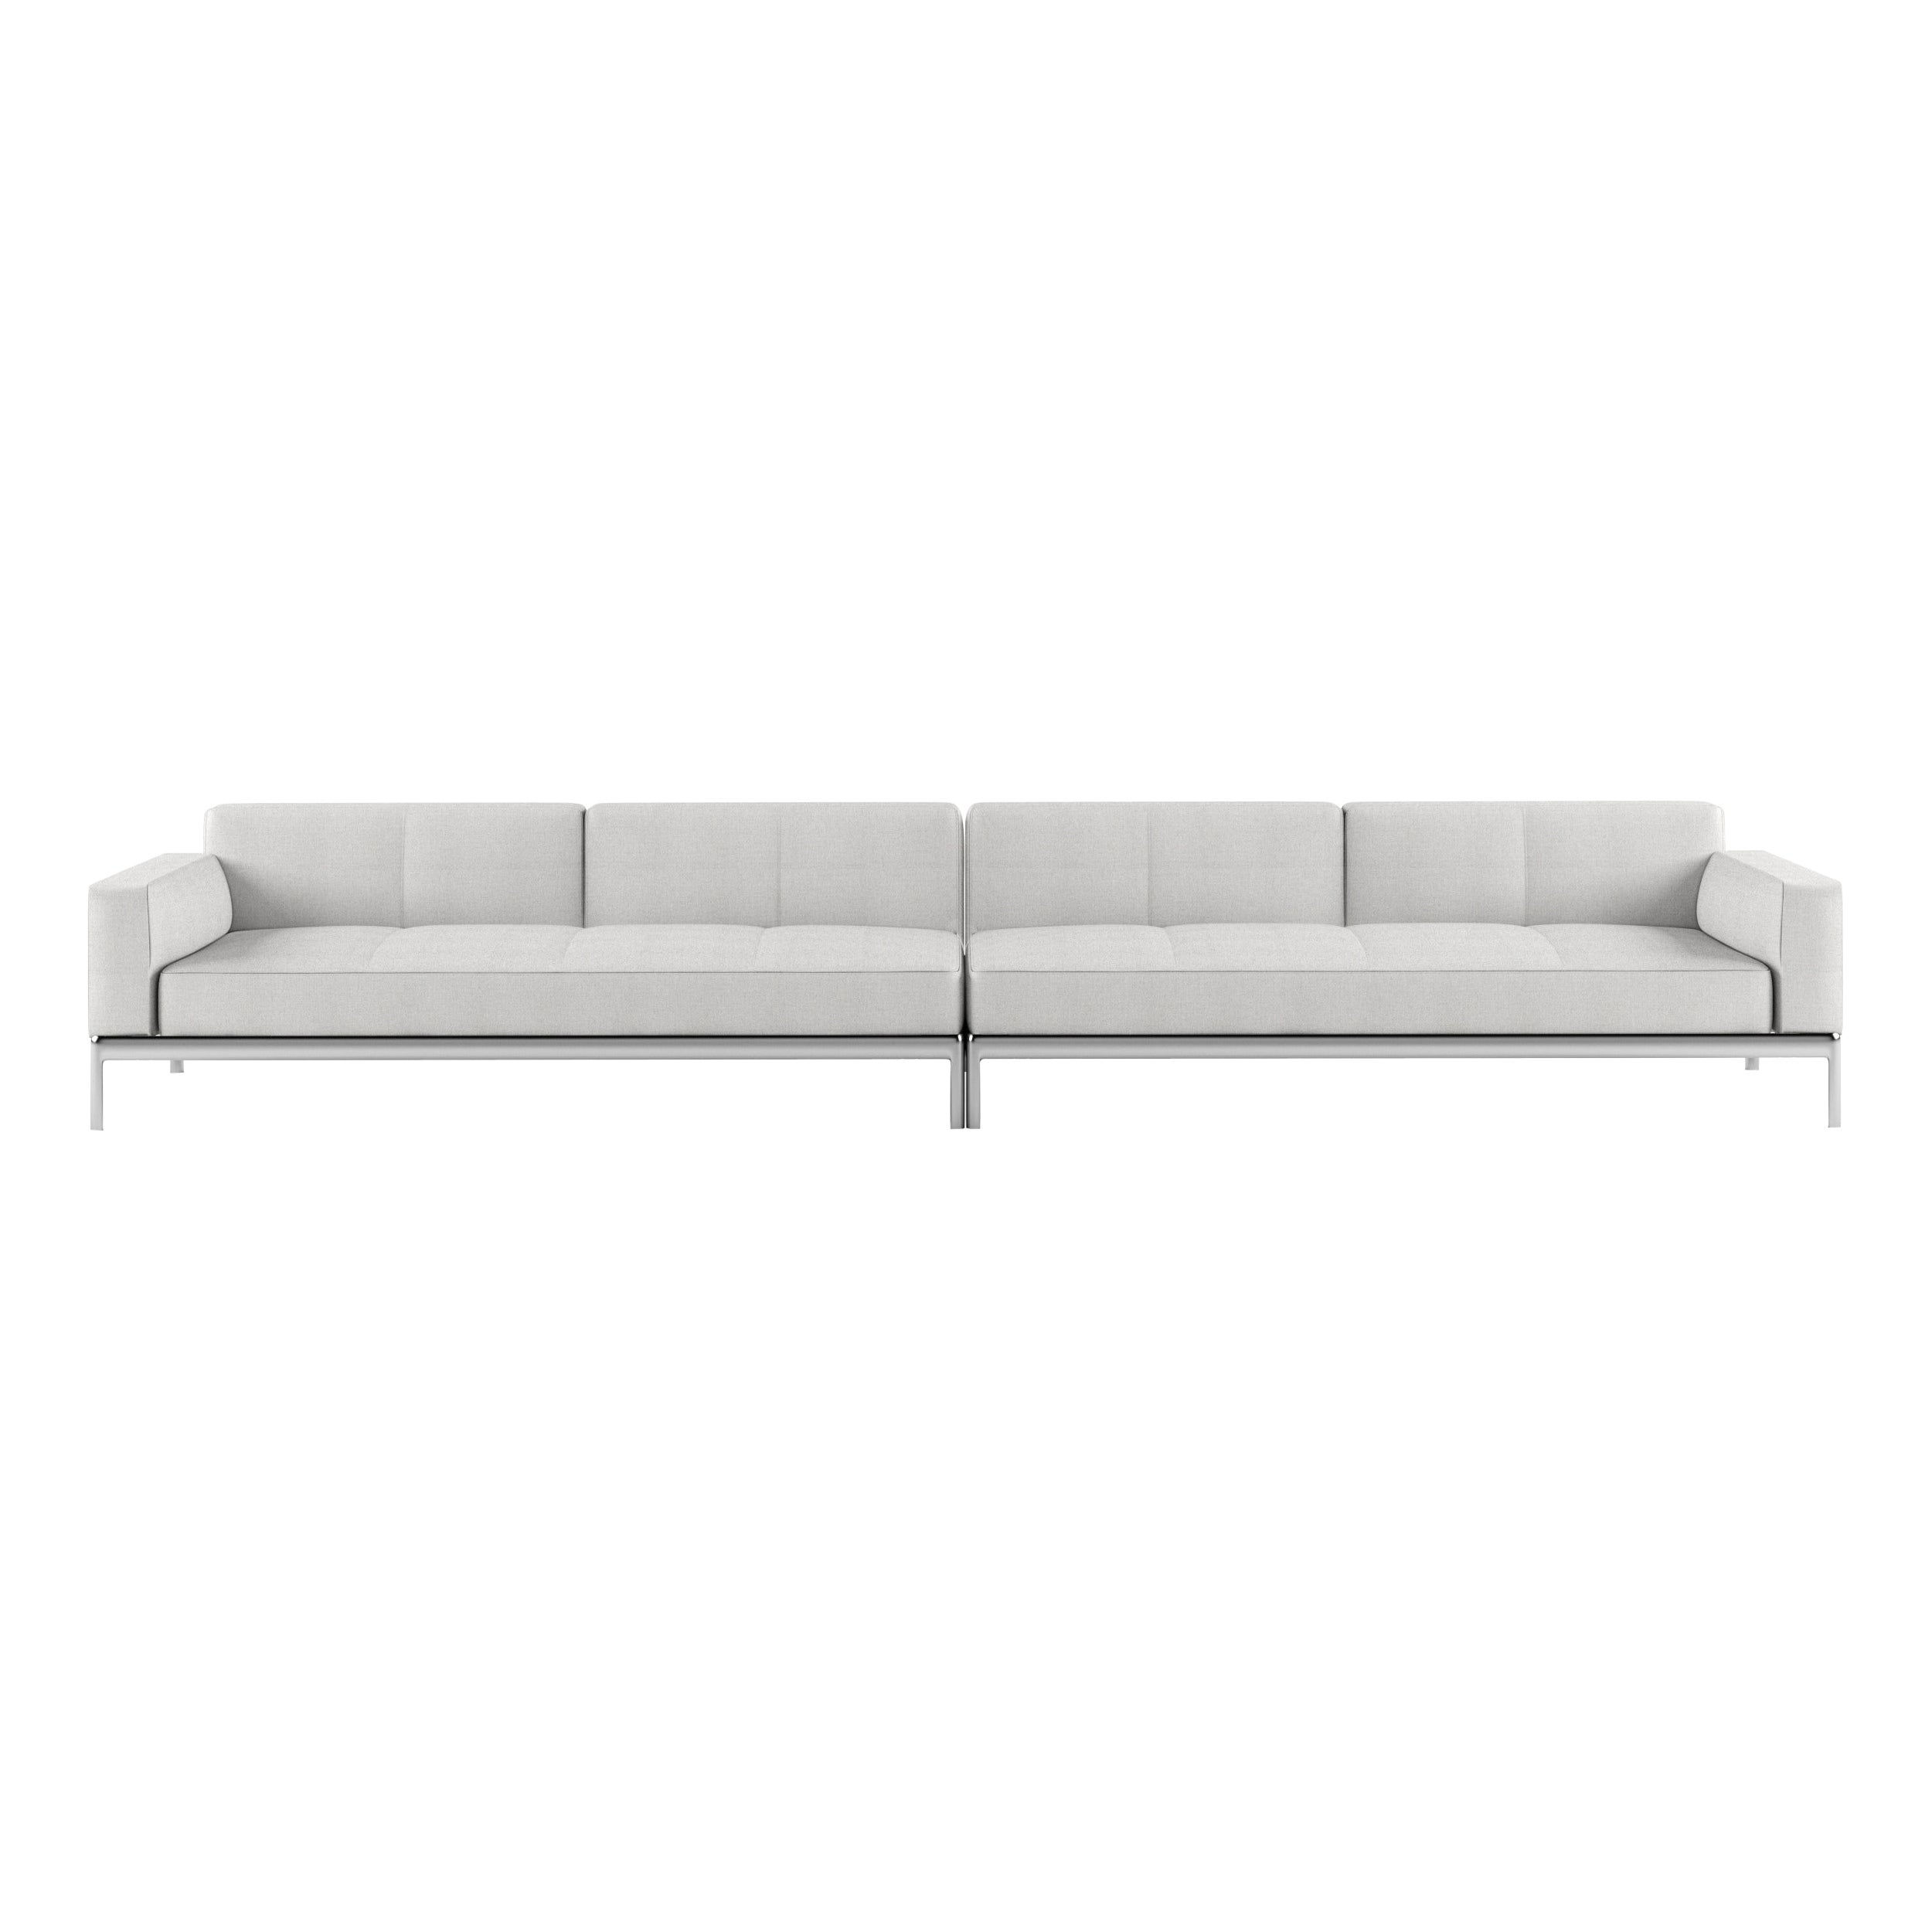 Alias P06 Aluminium-Sofa mit Polsterung und Polsterung aus poliertem Aluminiumrahmen im Angebot